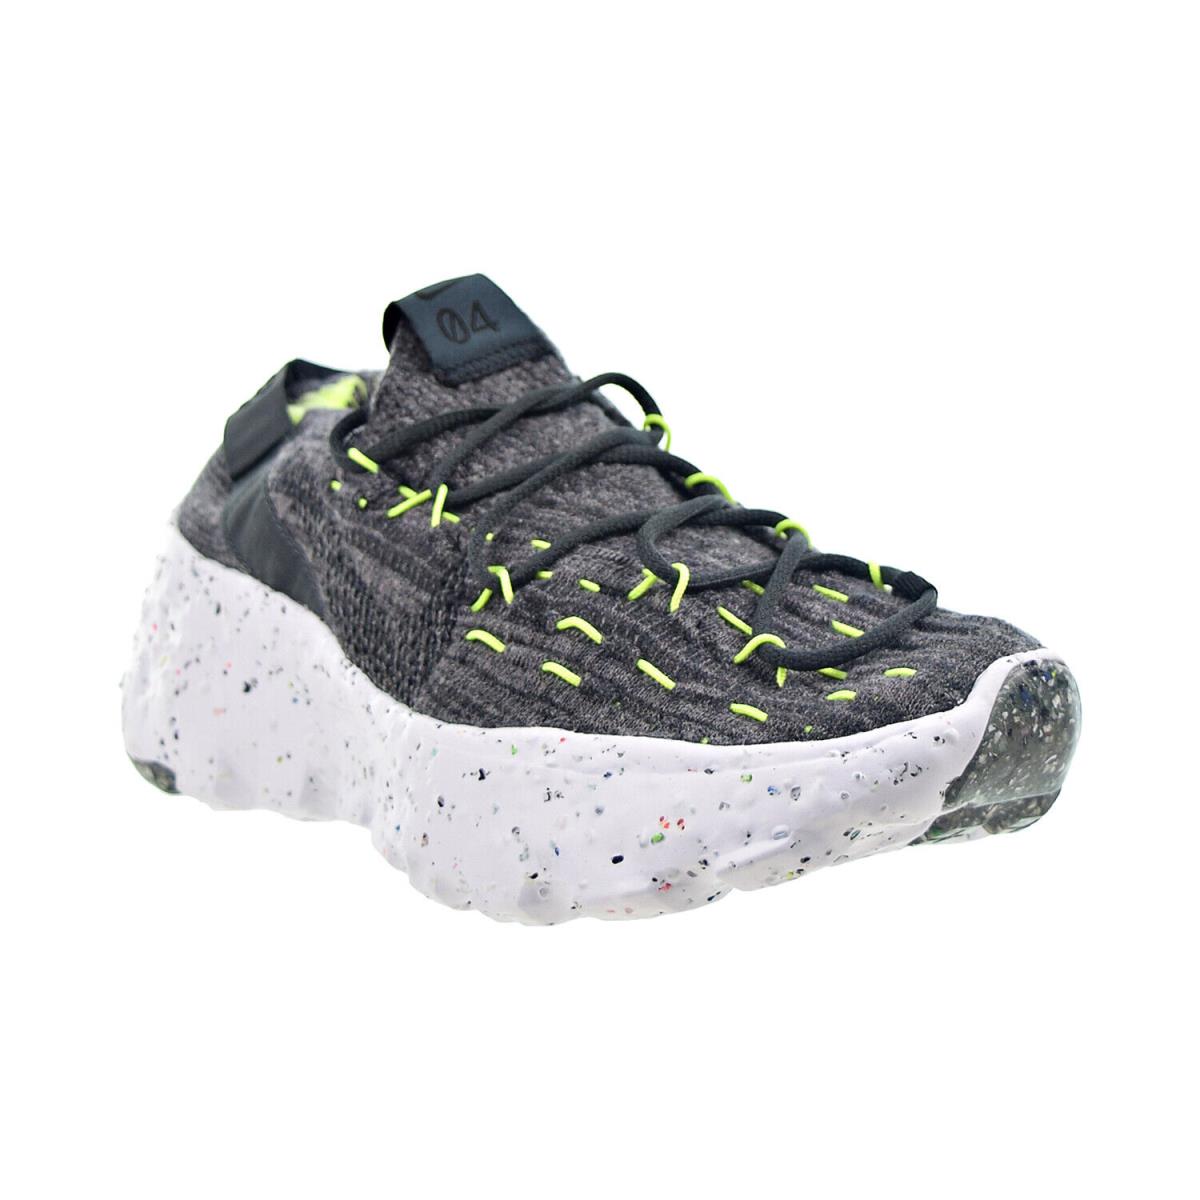 Nike Space Hippie 04 Men`s Shoes Black-volt-white CZ6398-010 - Black-Volt-White